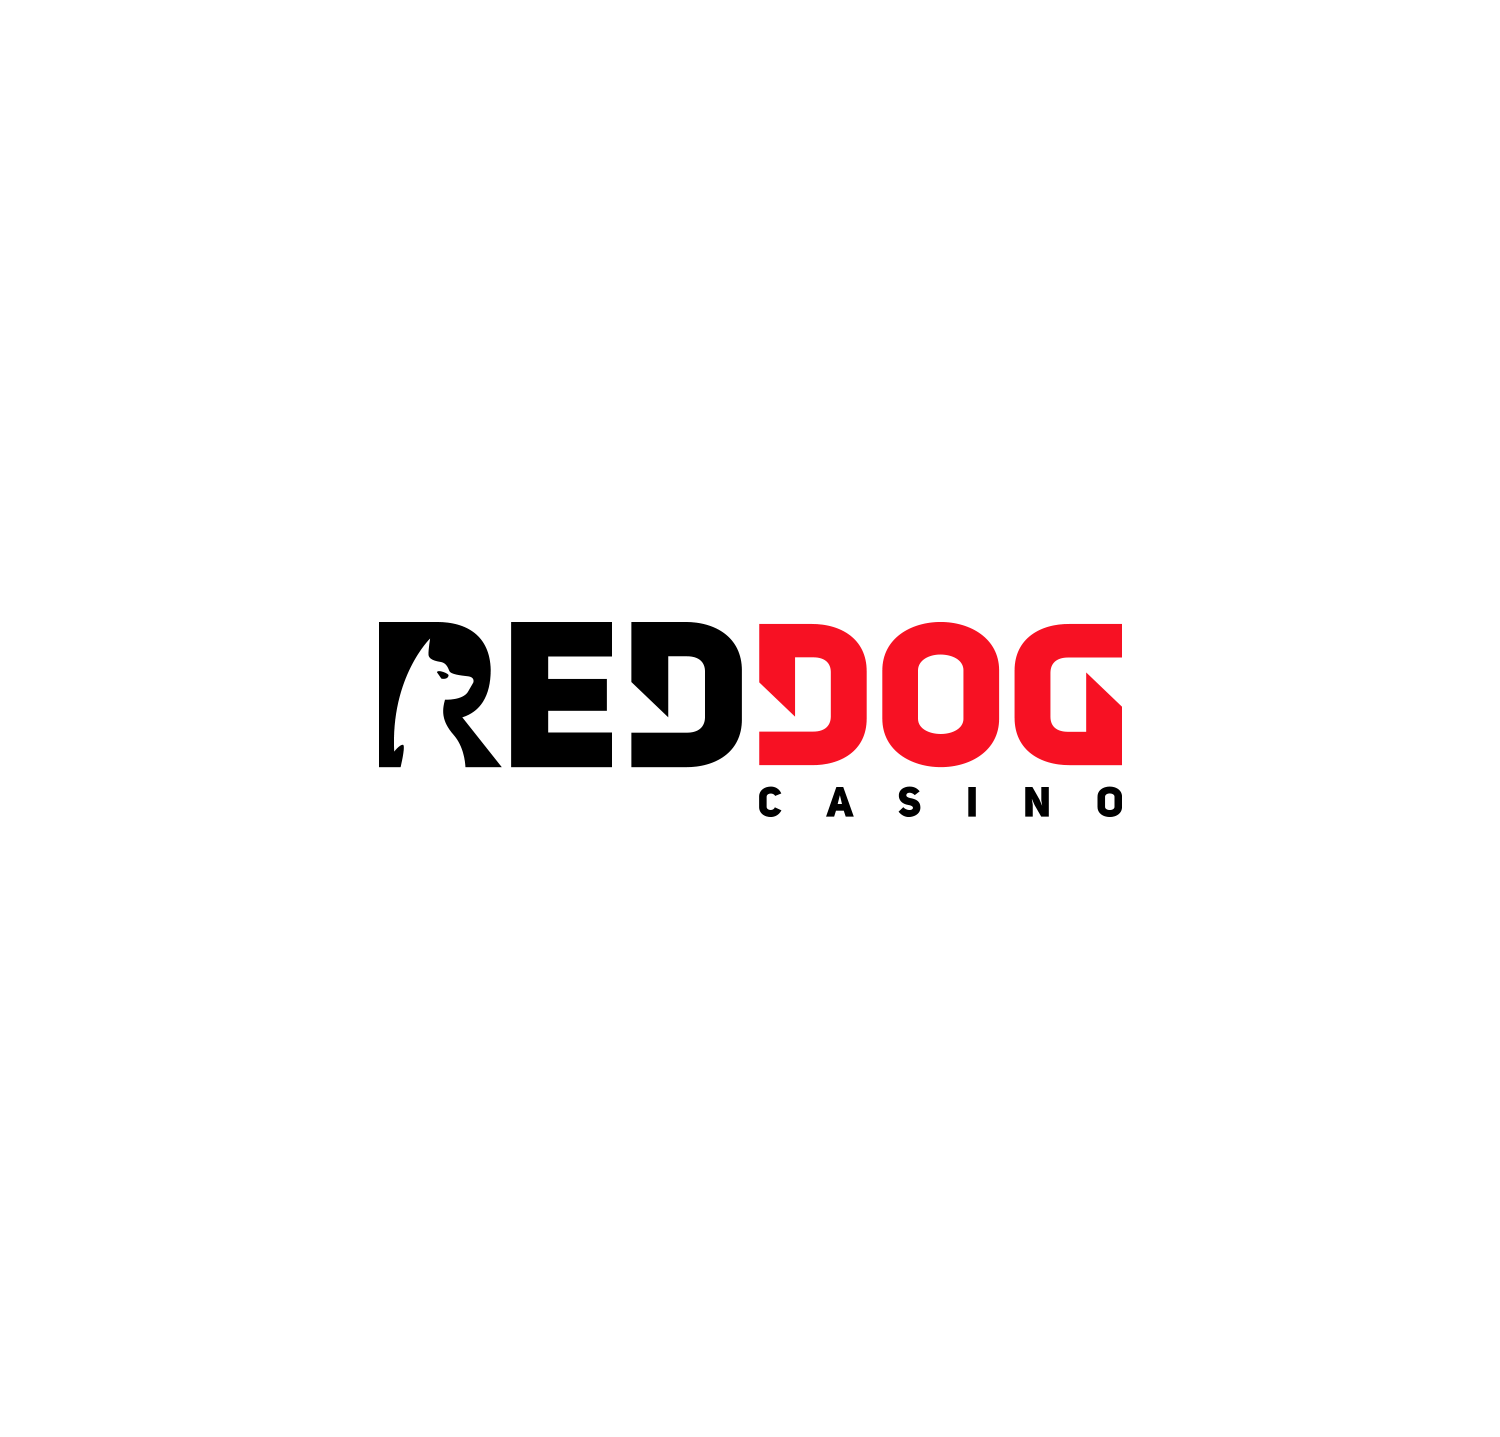 Red Dog bonuses